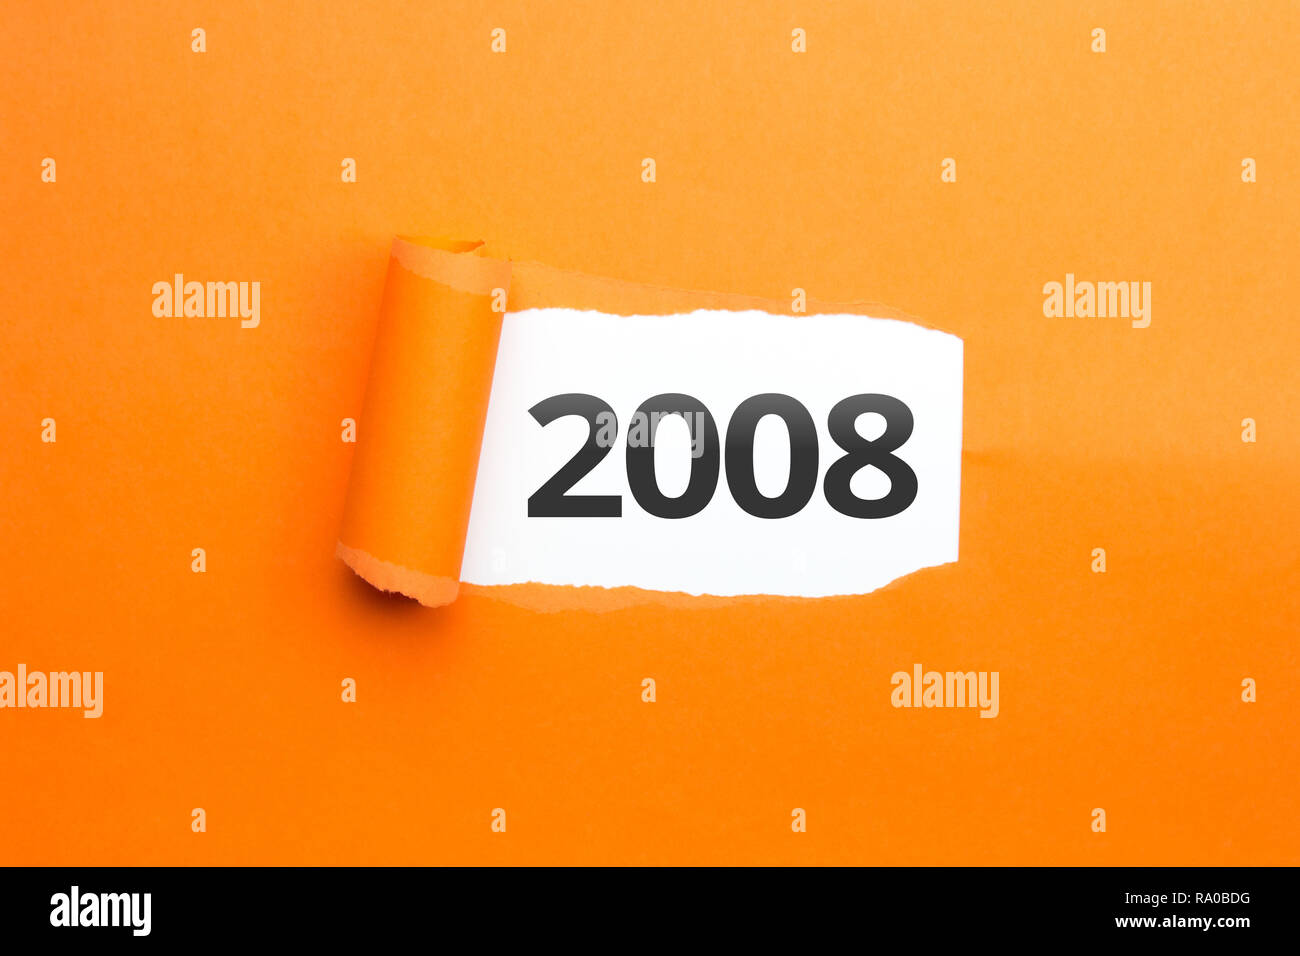 surprising Number / Year 2008 orange background Stock Photo